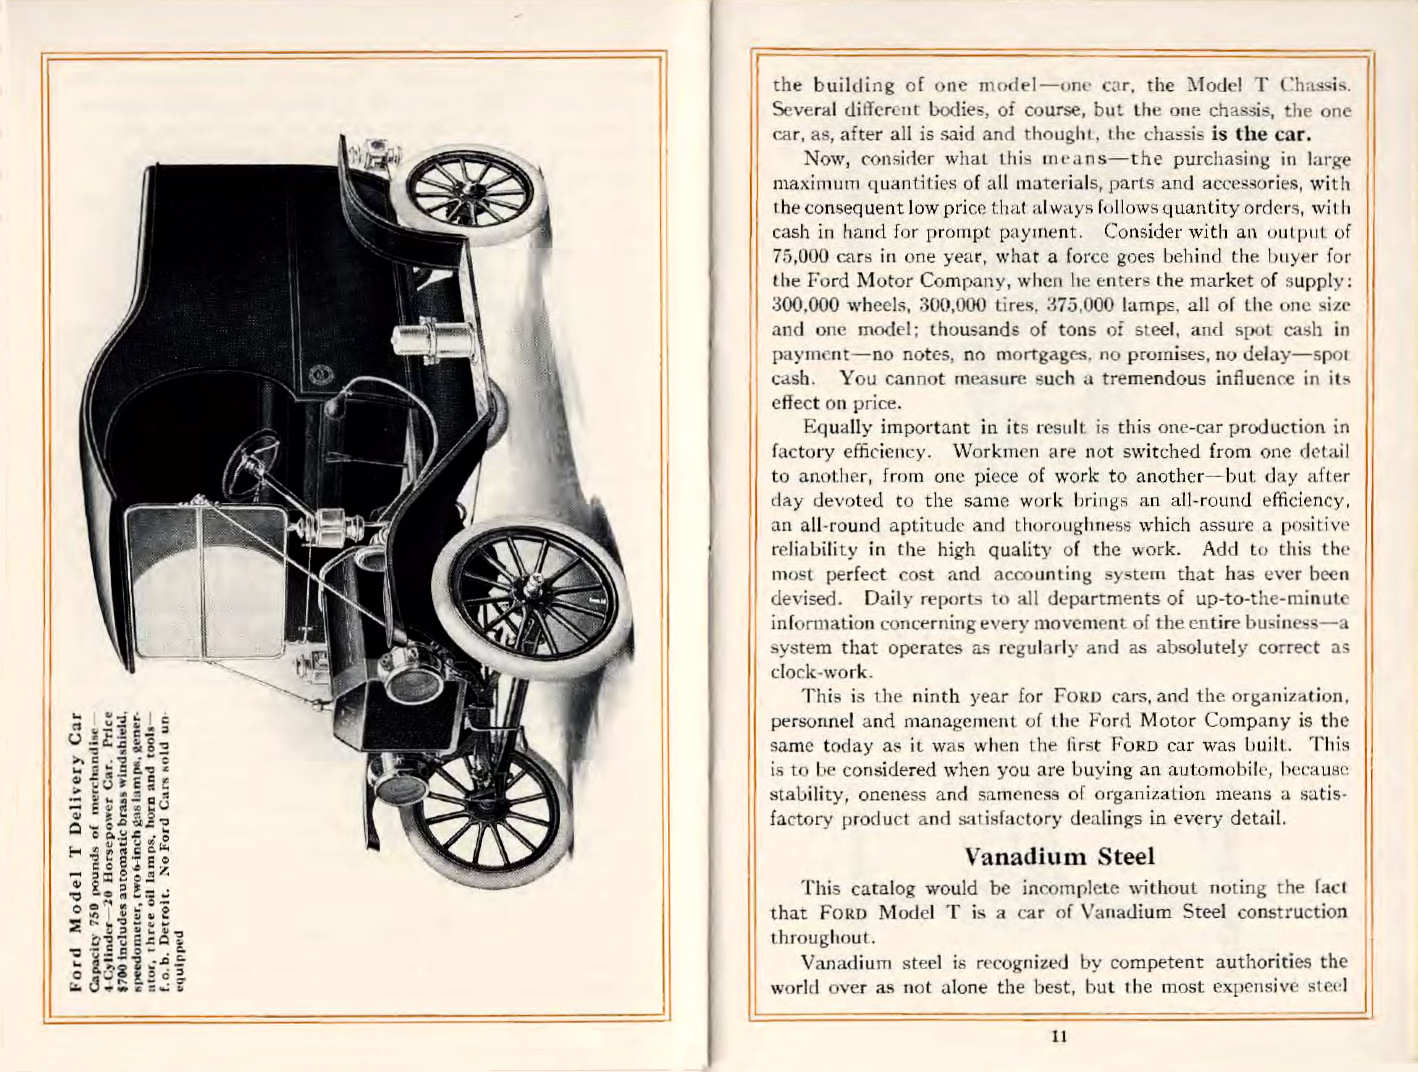 n_1912 Ford Motor Cars-10-11.jpg